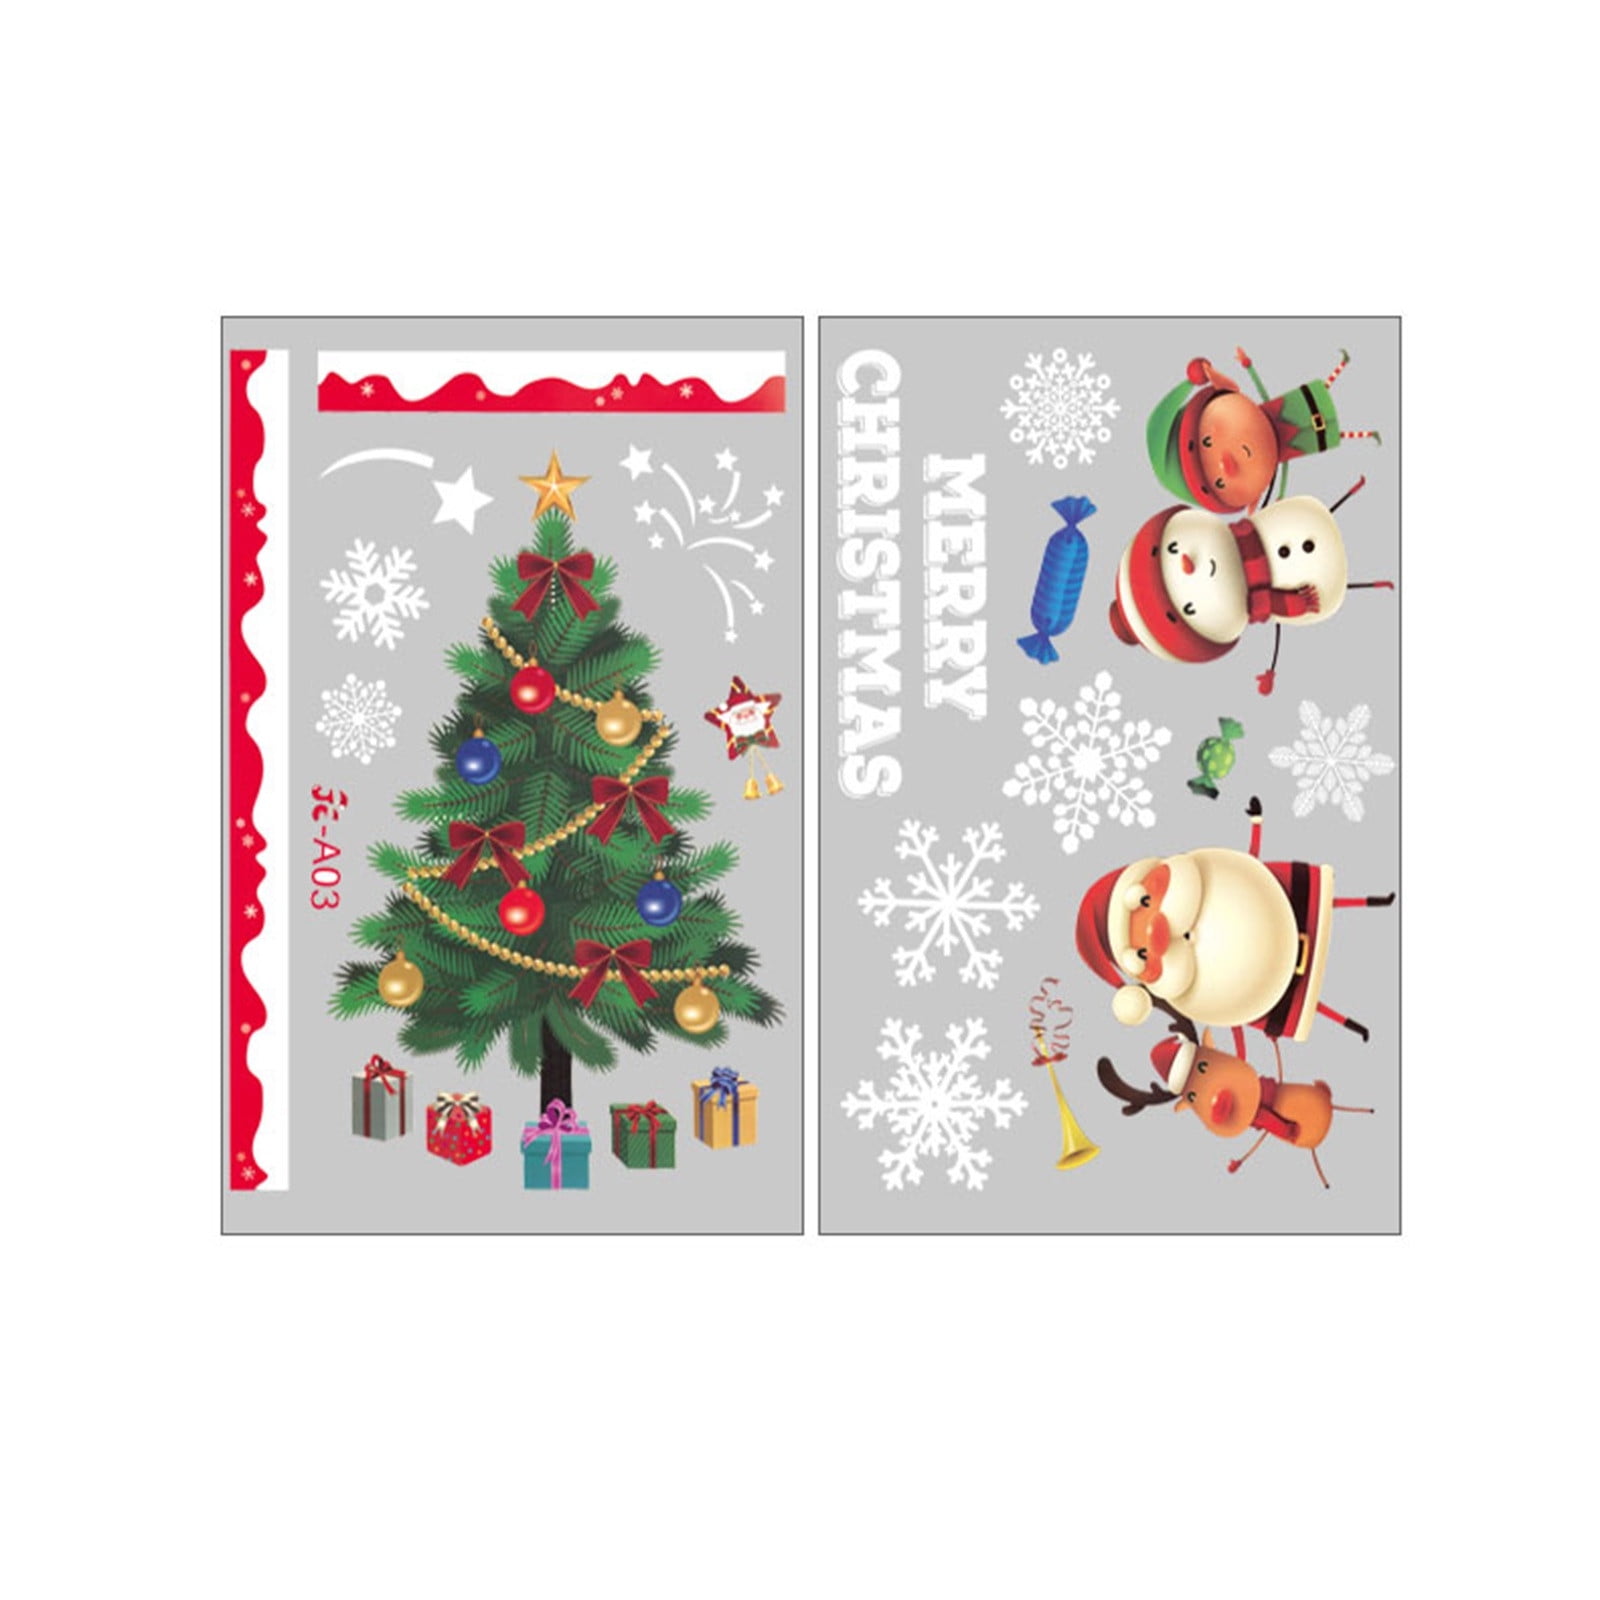 1x Christmas Window Decor Xmas Gel Stickers Santa Decal Wall Home Shop Decor UK 